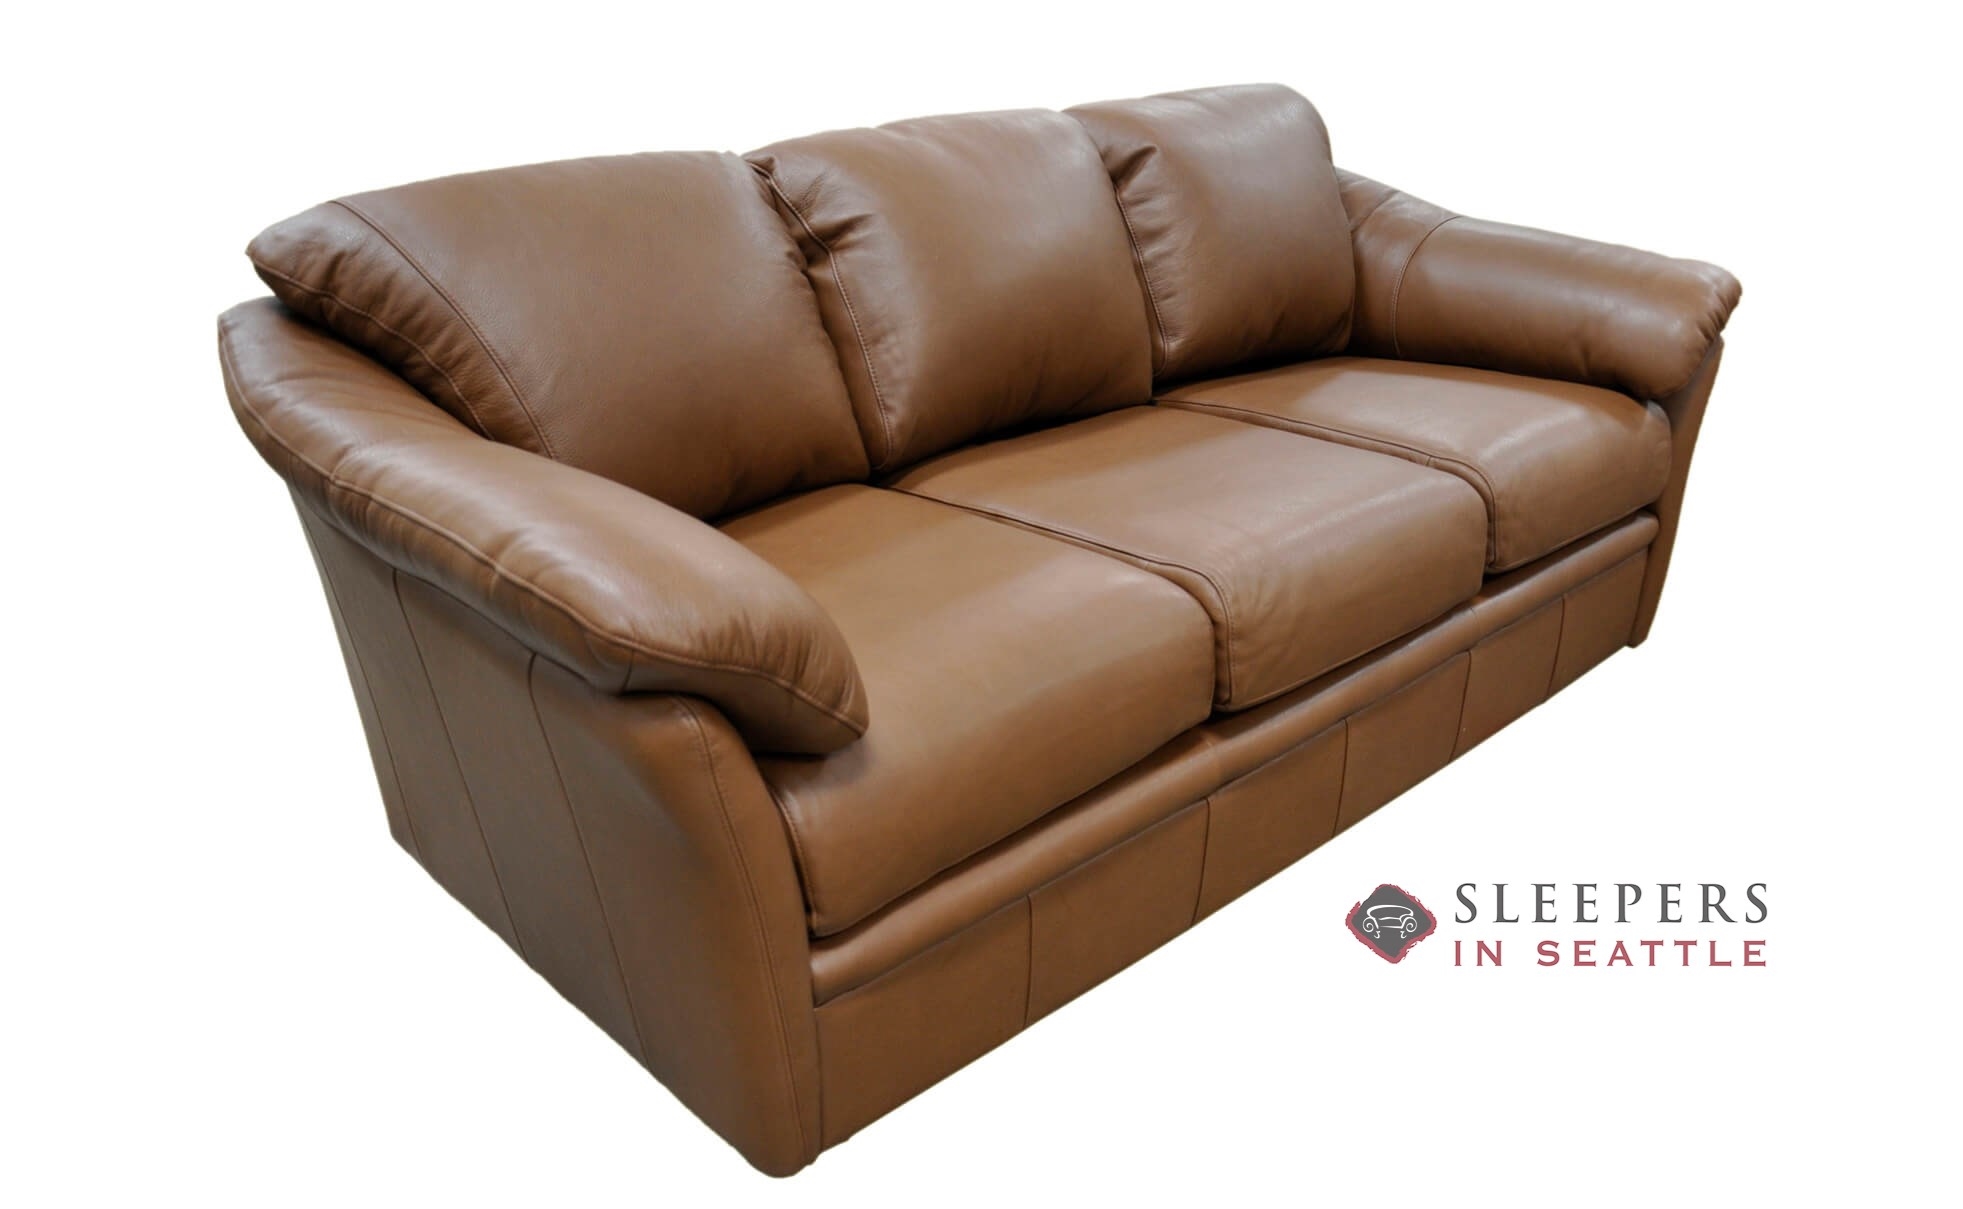 omnia leather vegas full sofa sleeper